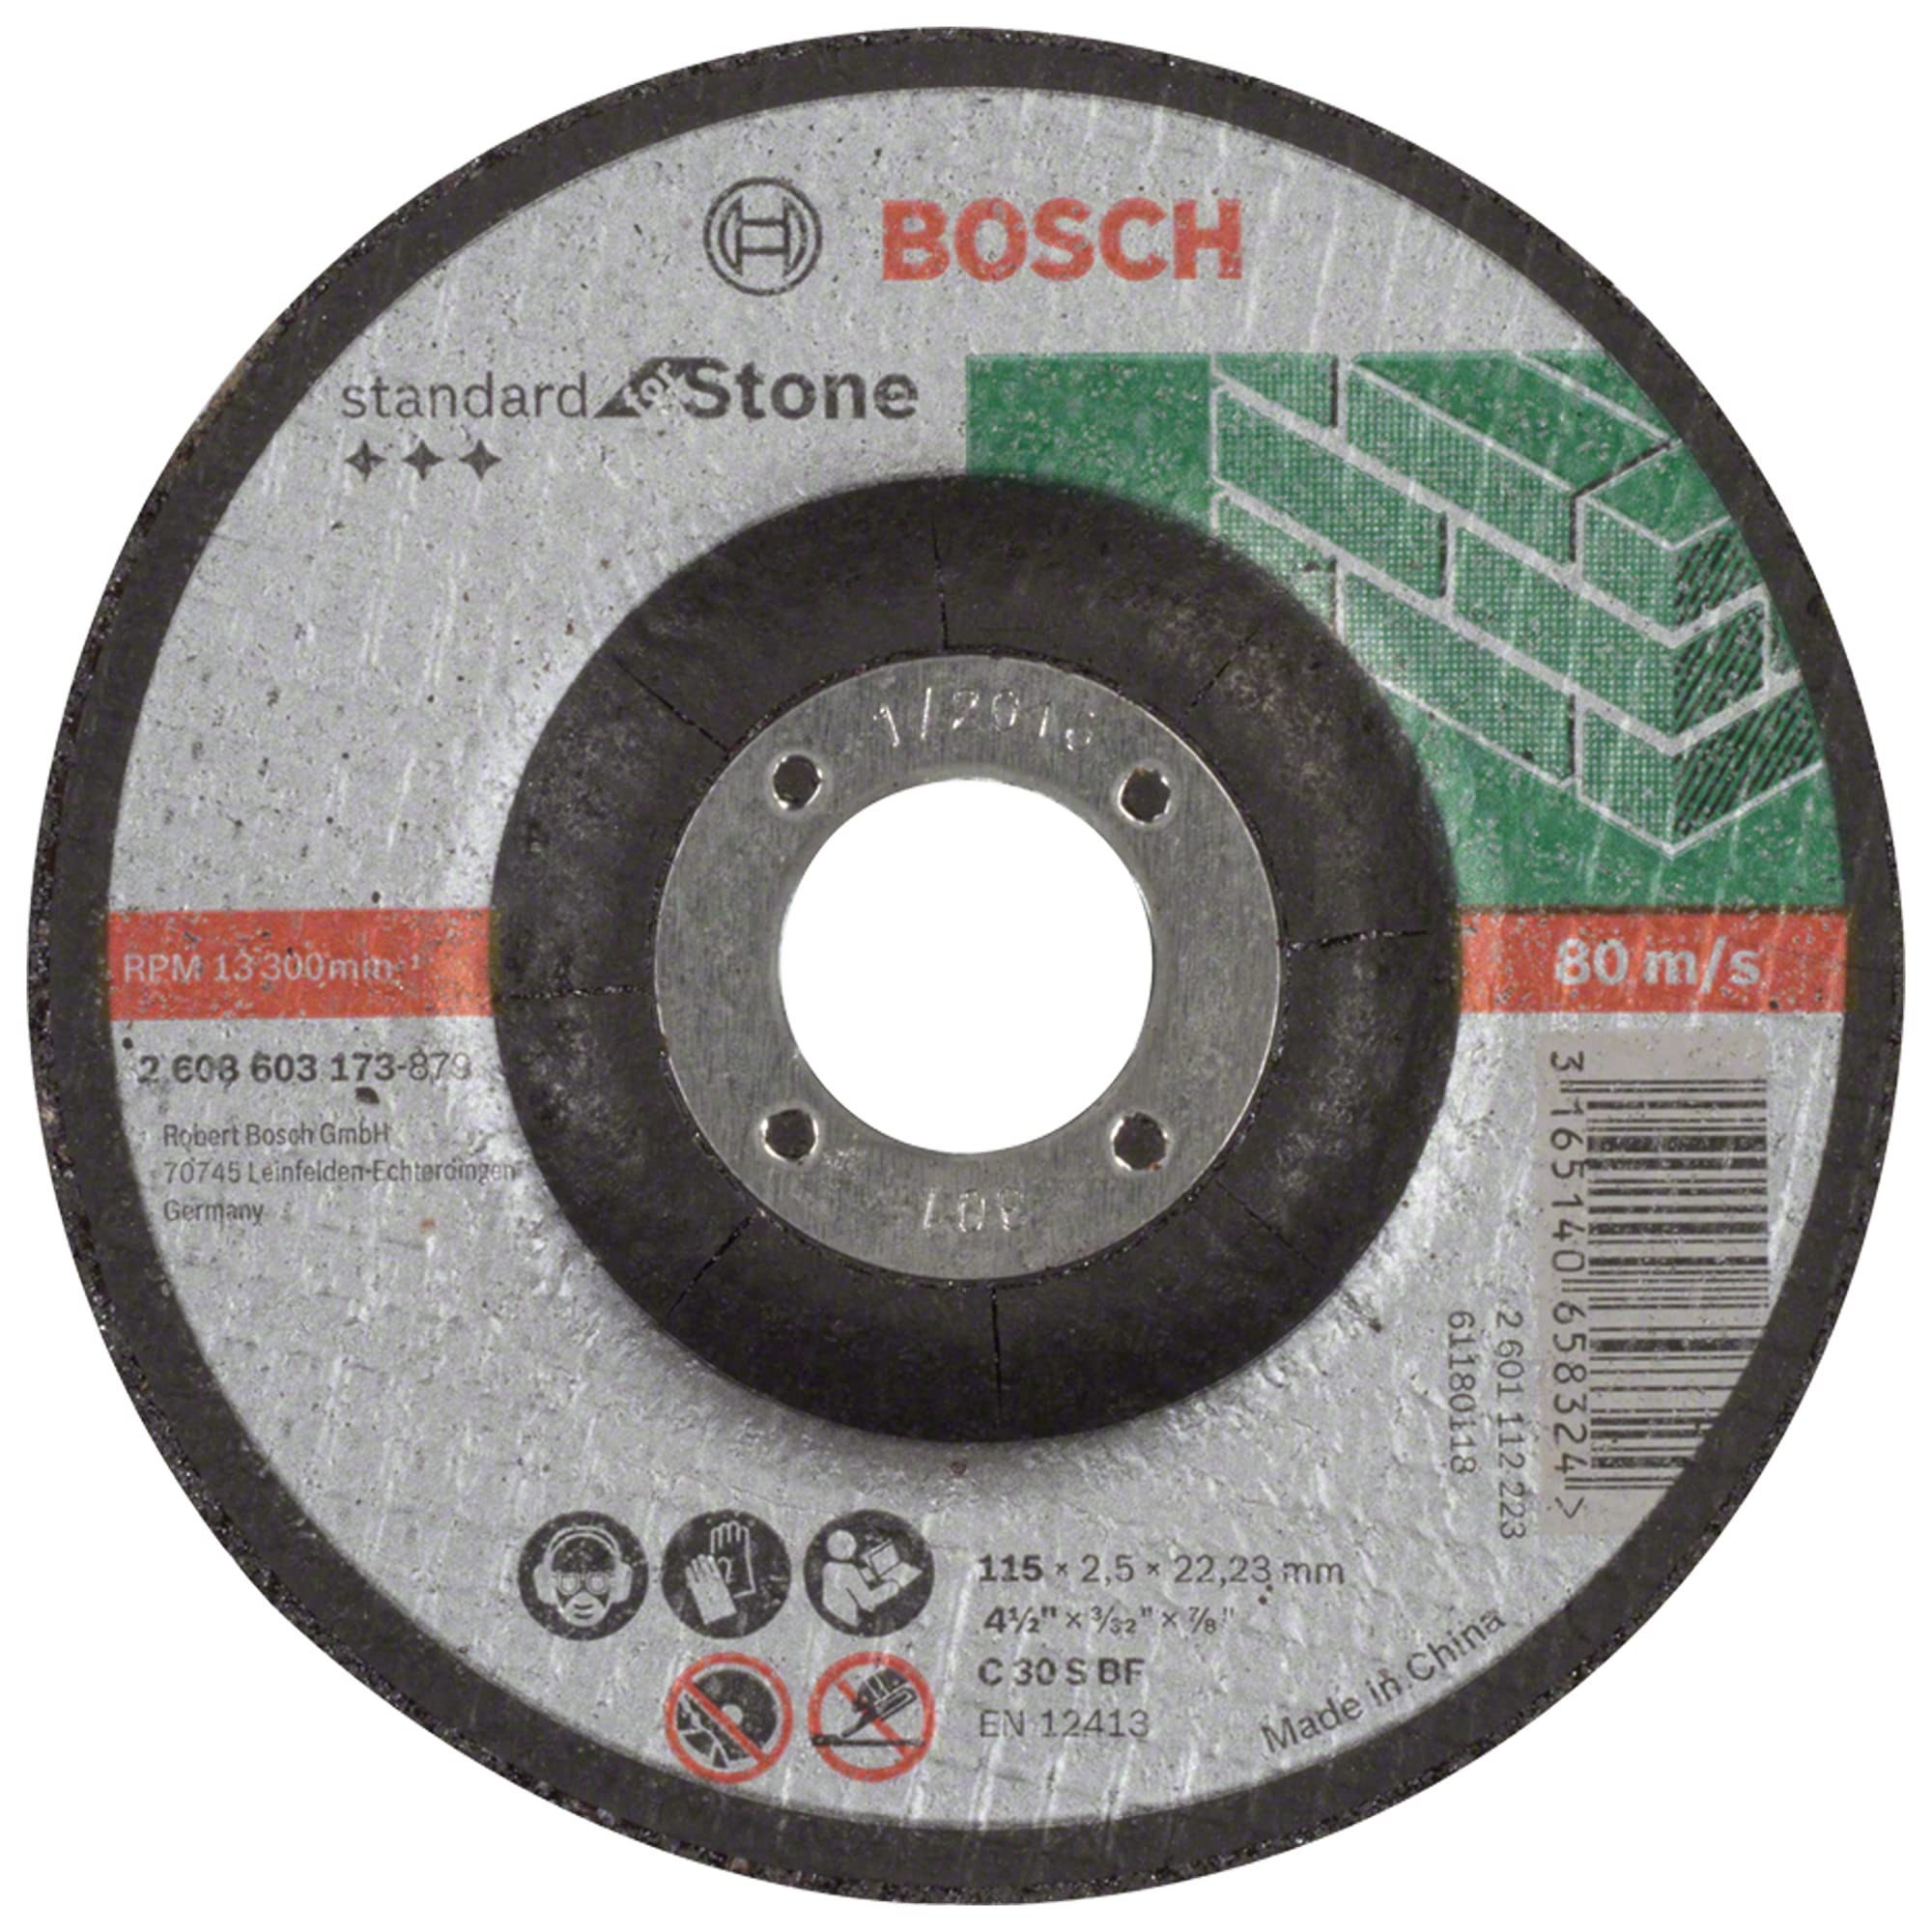 Bosch Std Stone Disc 115X2.5X22.23Mm D 2608603173 Power Tool Services